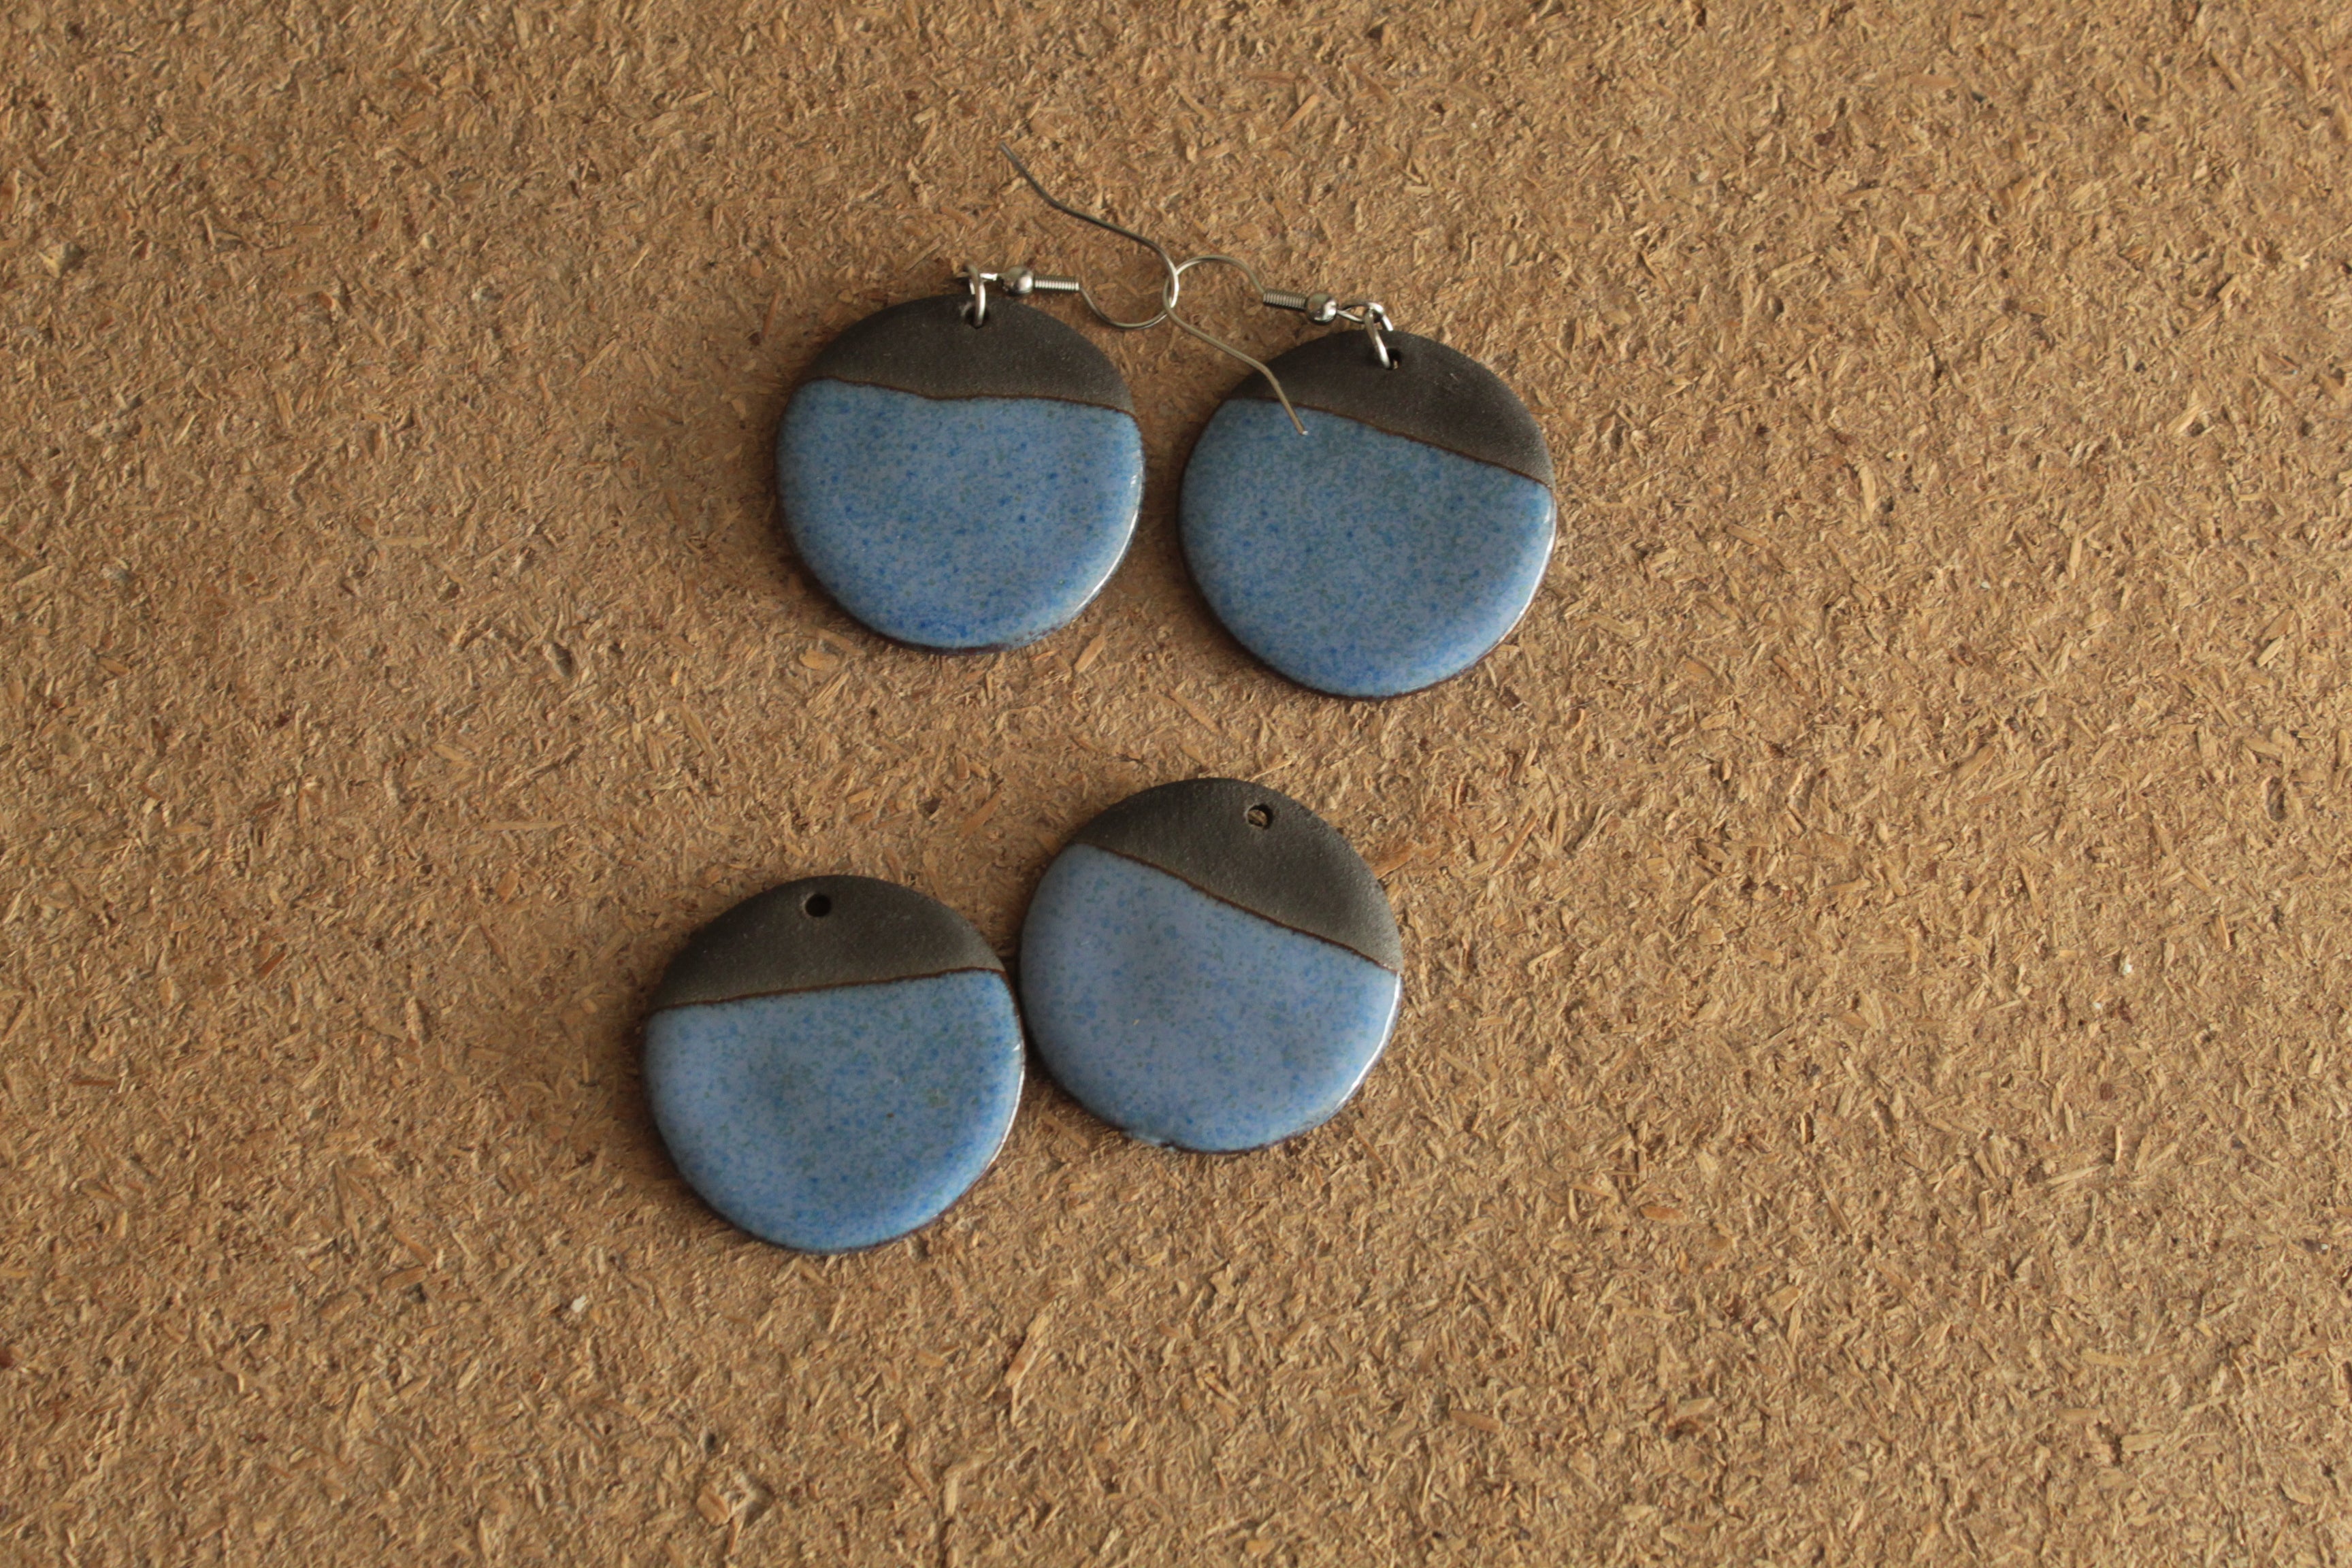 Black and blue circle dangling earrings